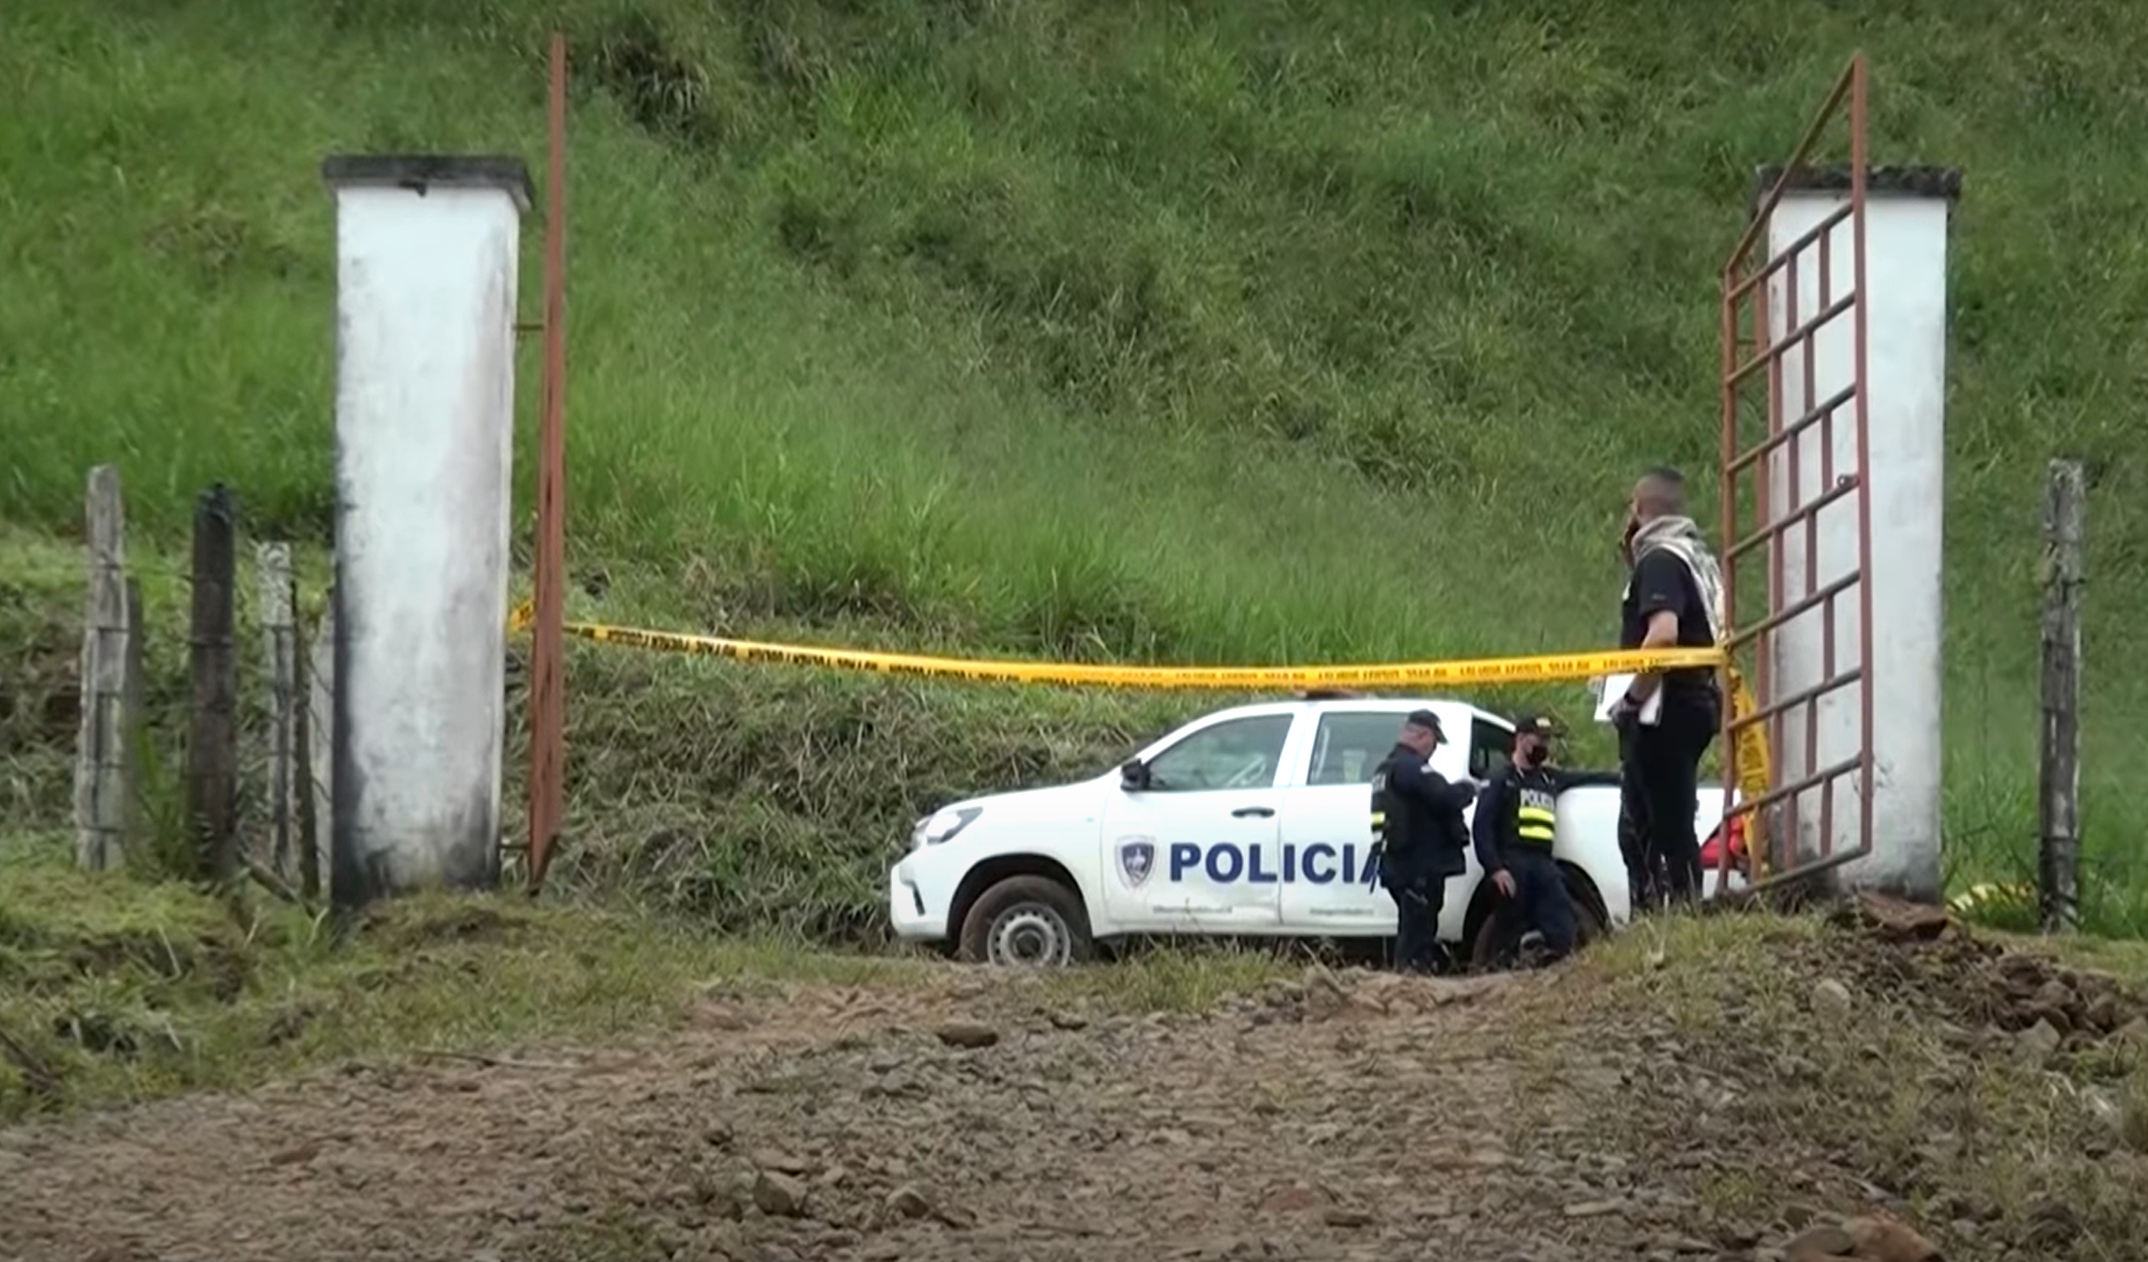 Police investigate the crime scene at the Costa Rica farm of Stephen Sandusky